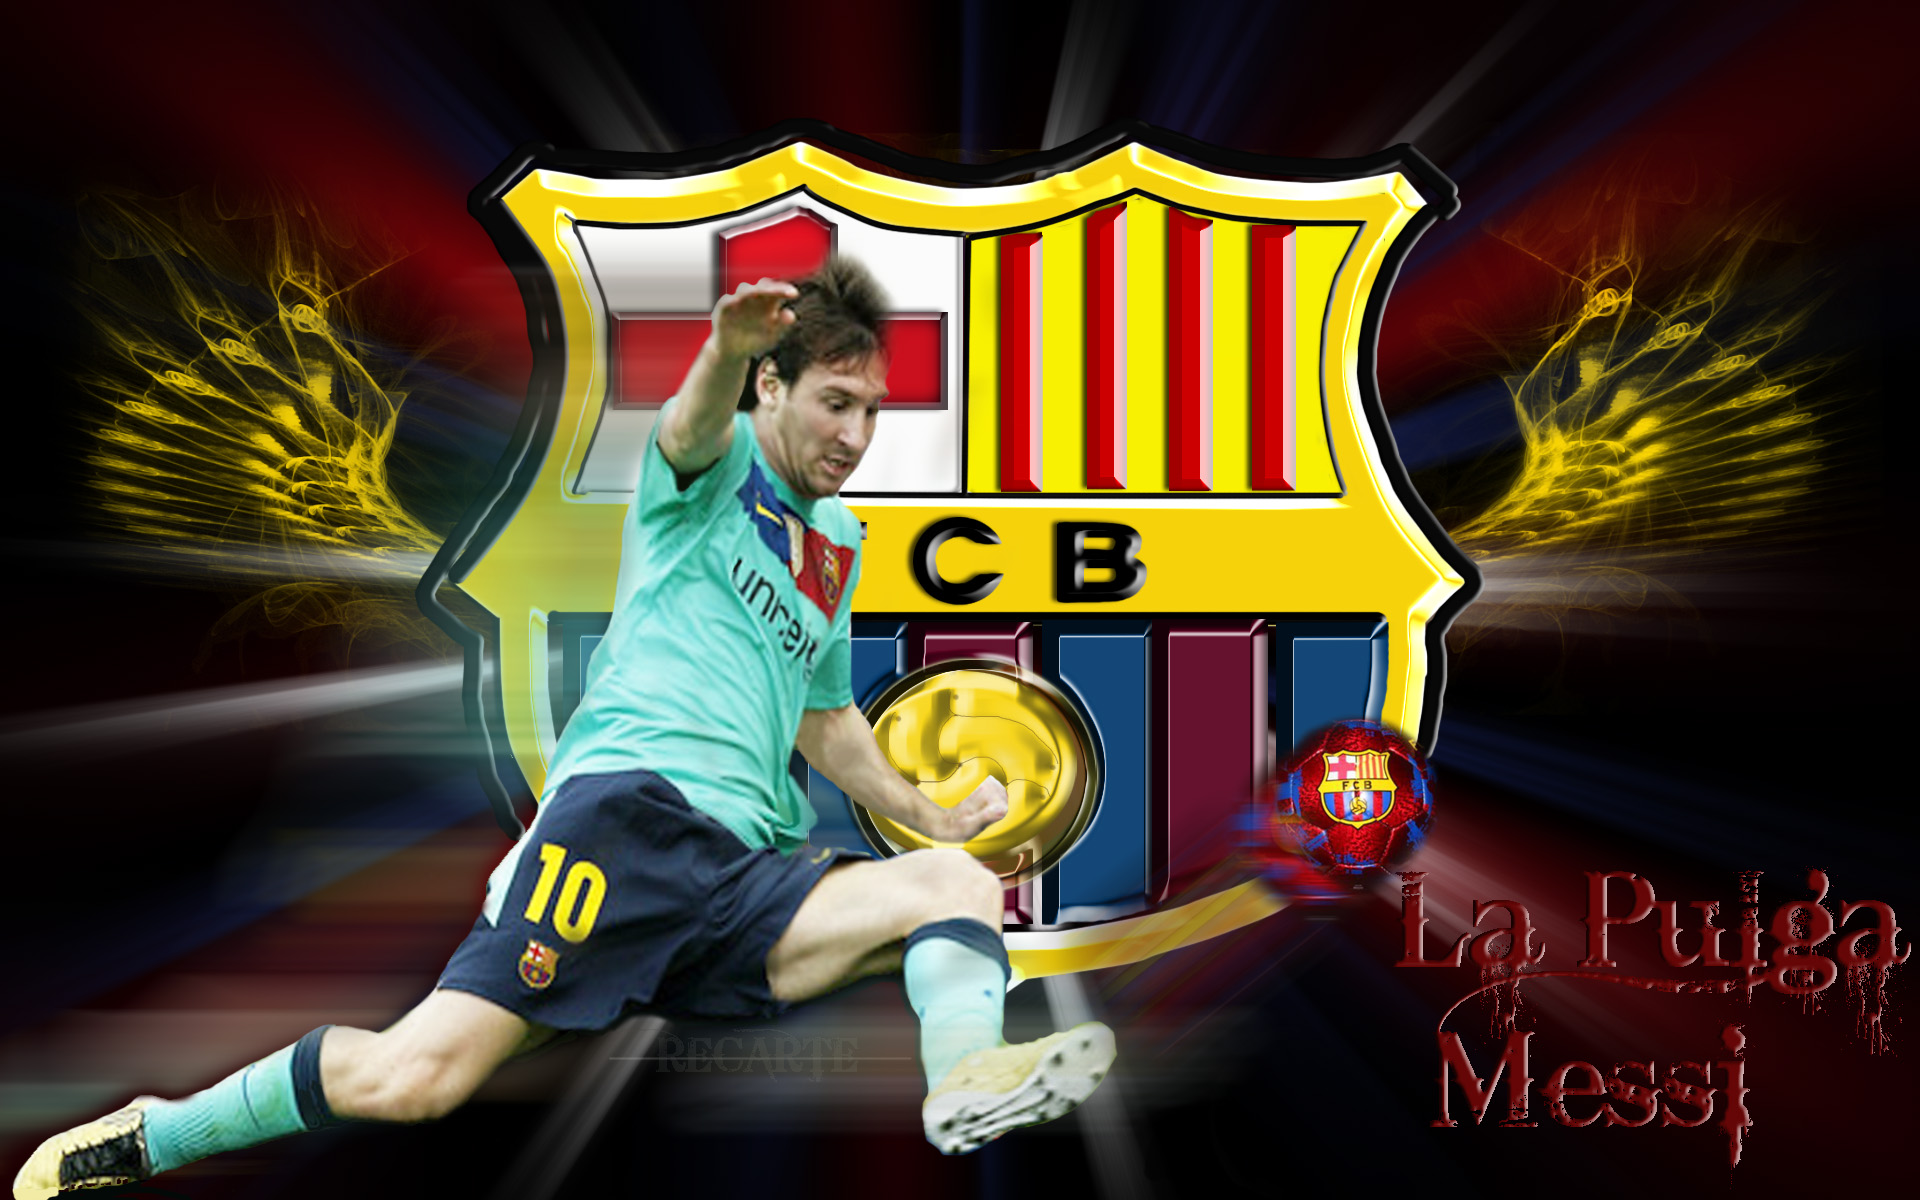 Messi Photo Download 2015 - HD Wallpaper 